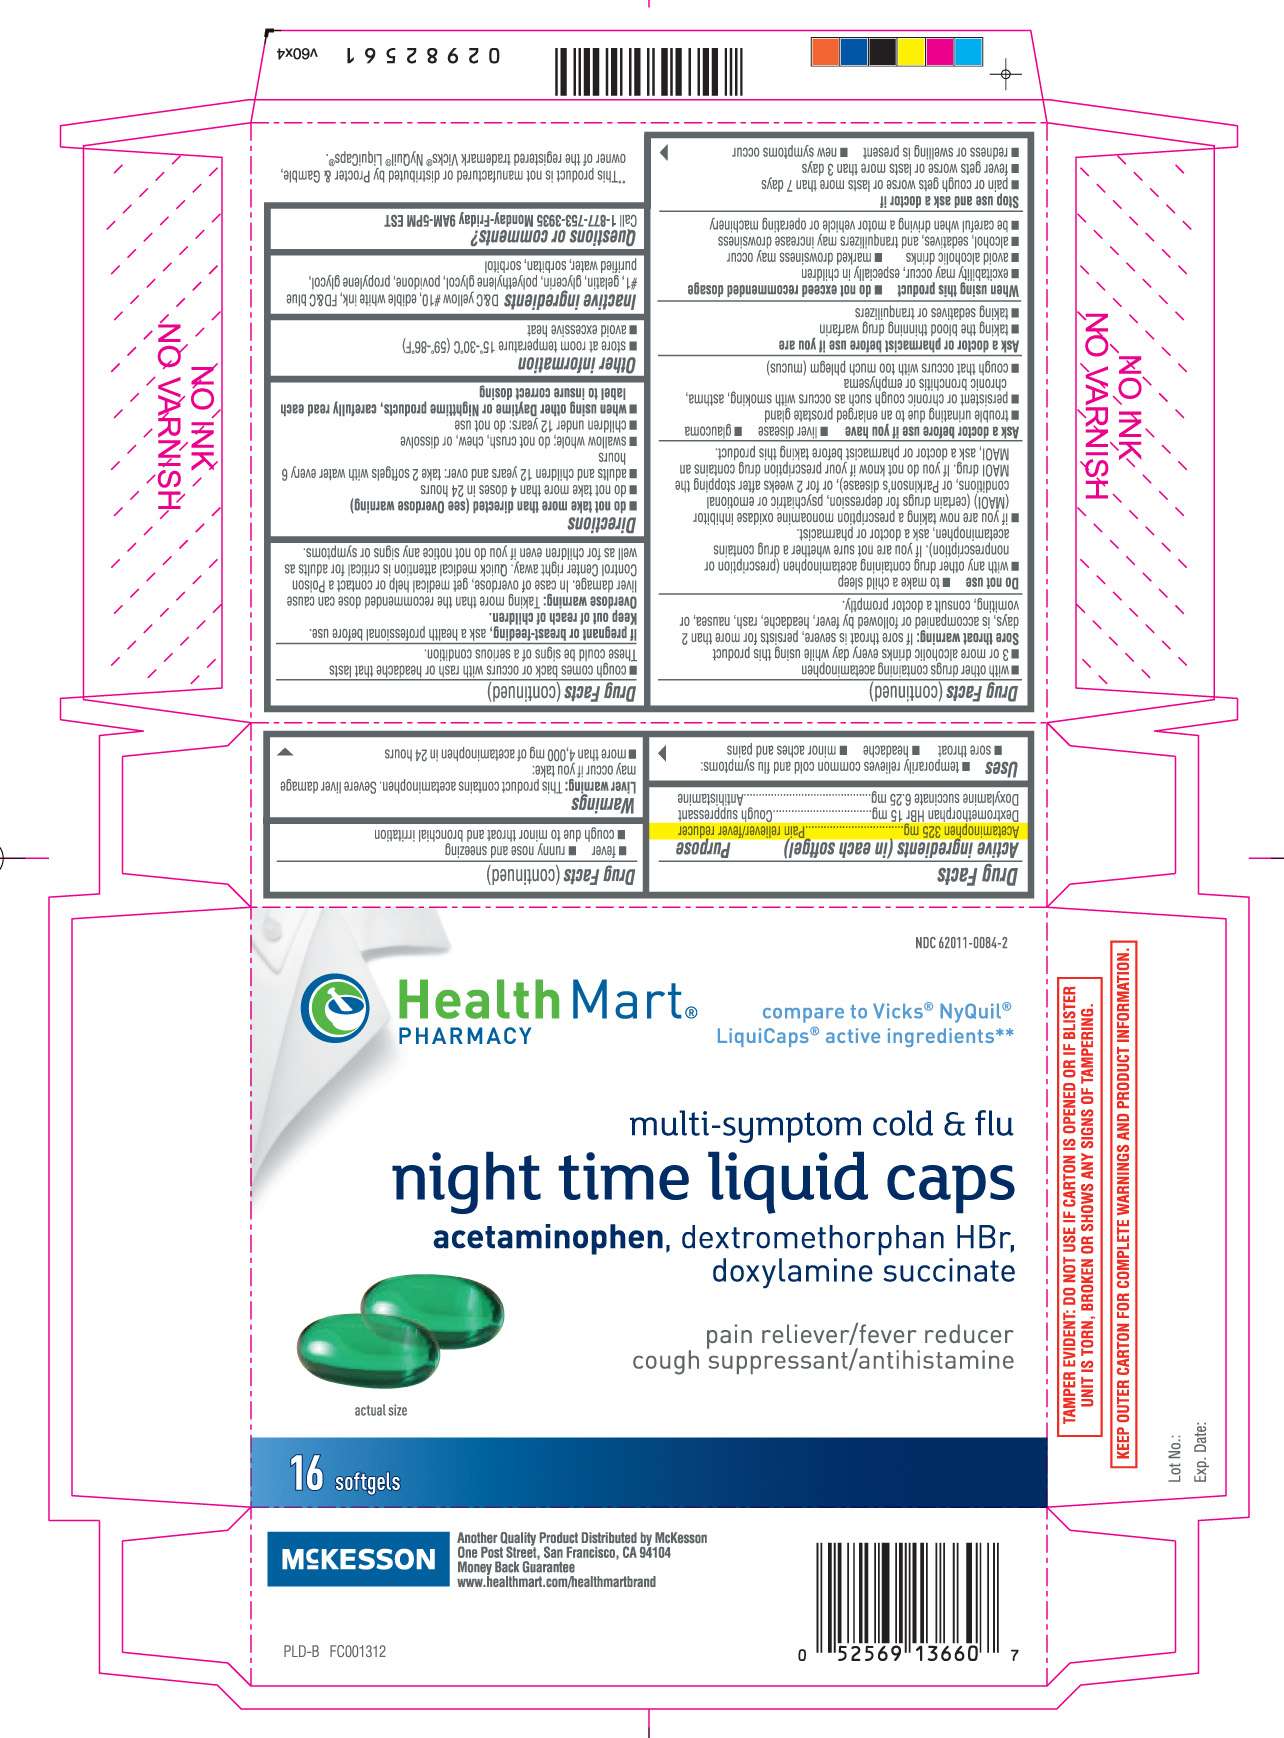 Health Mart Multi-Symptom Cold and Flu Night Time